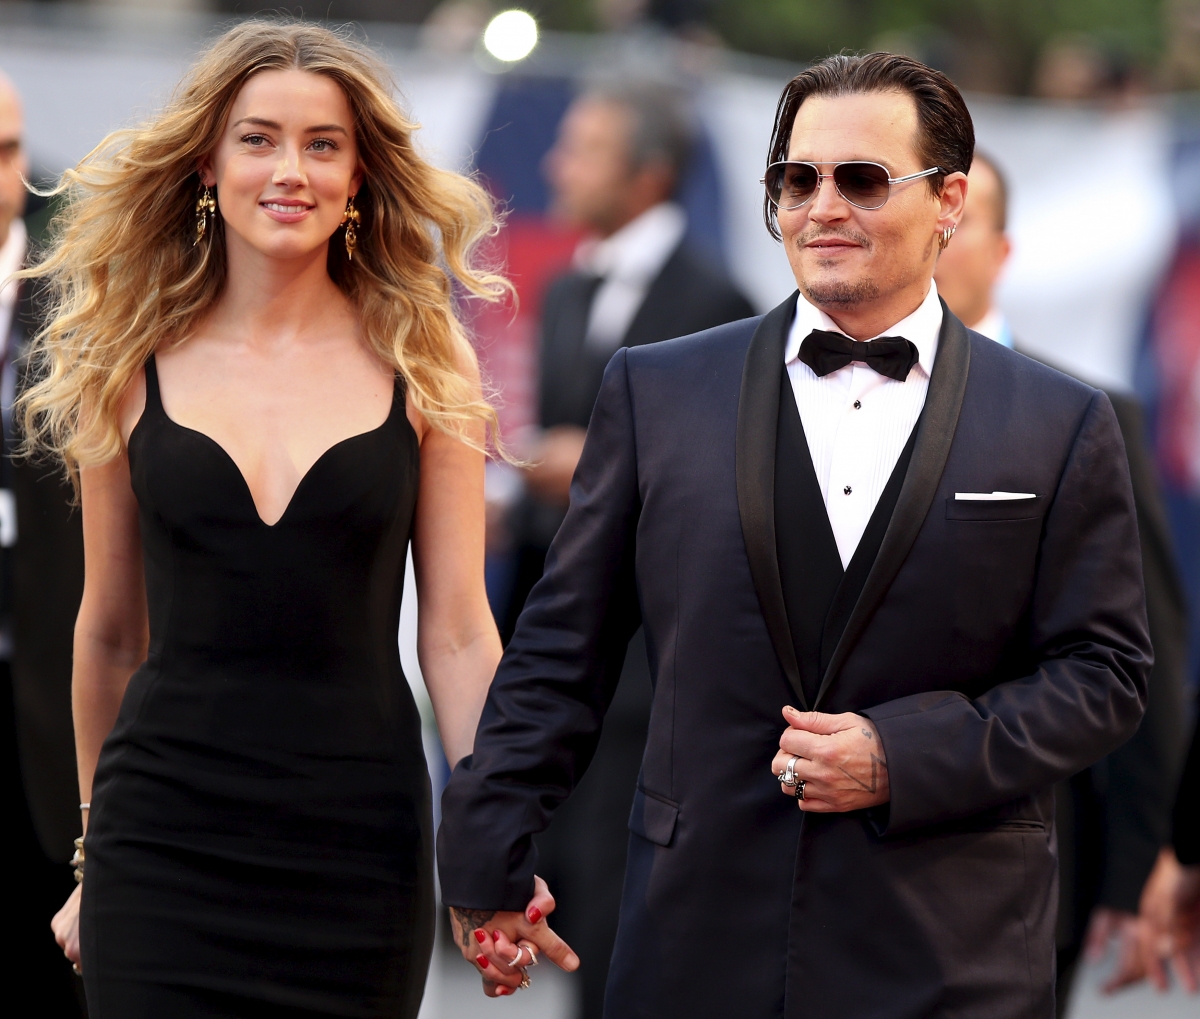 Johnny Depp v Amber Heard: $50 million defamation suit takes an ugly turn - IBTimes India